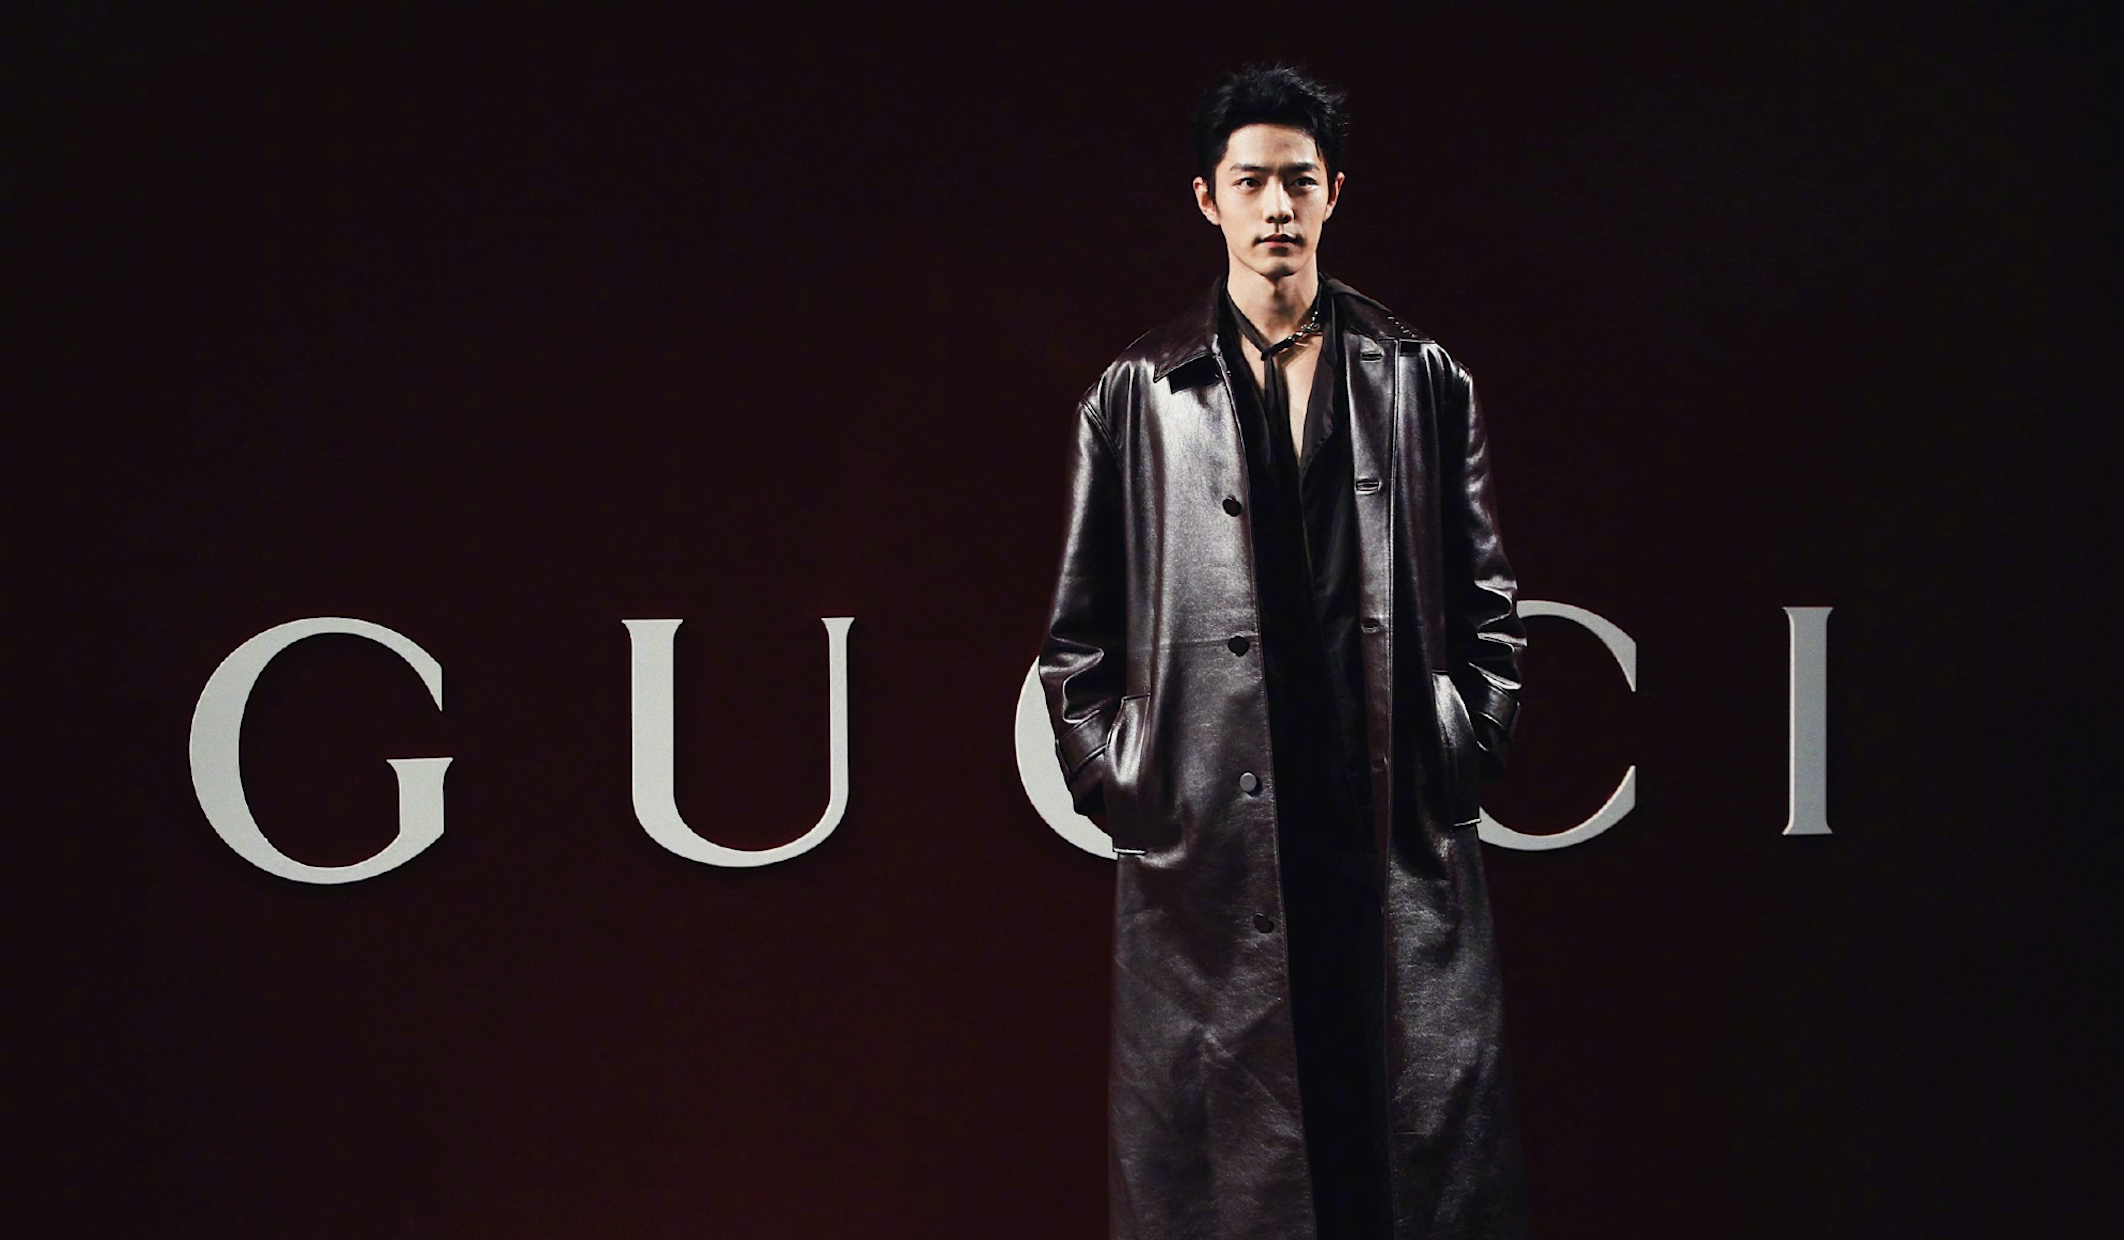 Can Xiao Zhan’s star power amplify Sabato De Sarno’s Gucci in China?